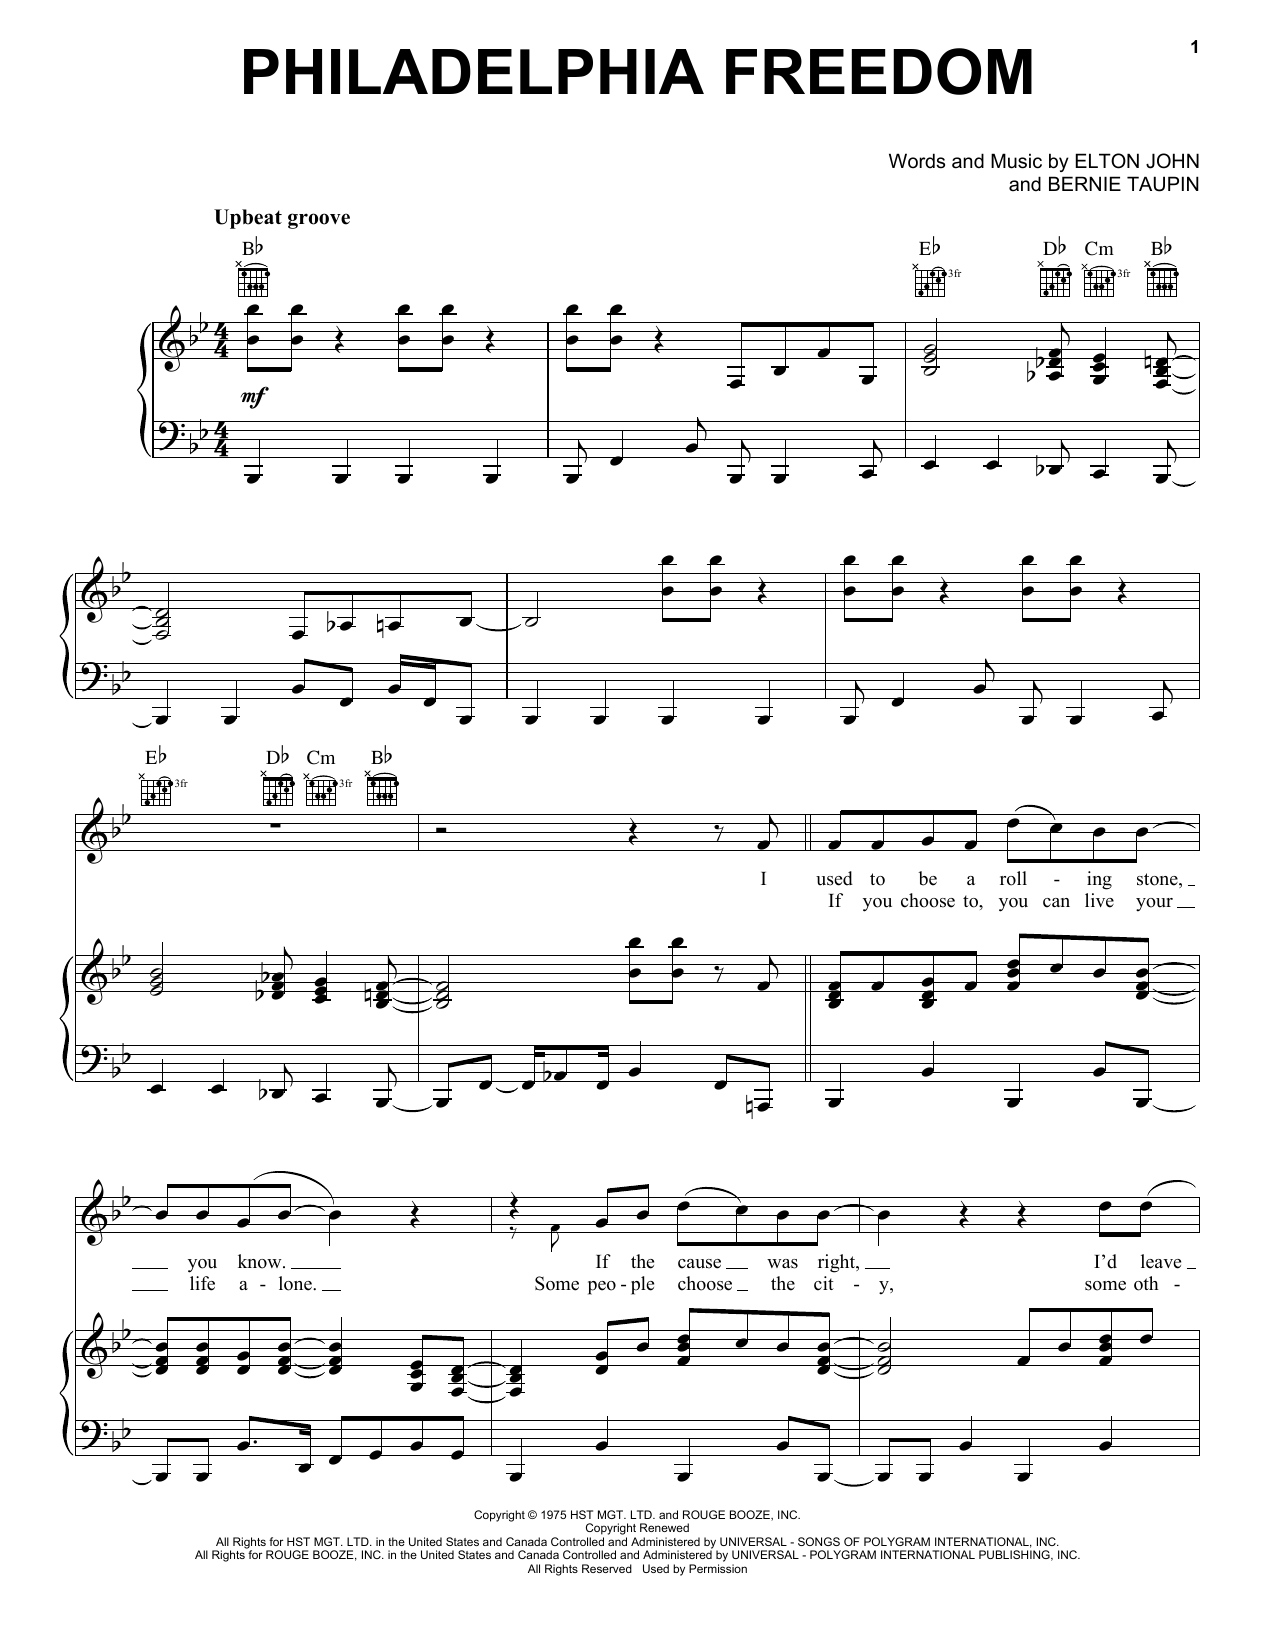 Elton John Philadelphia Freedom Sheet Music Notes & Chords for Easy Guitar with TAB - Download or Print PDF